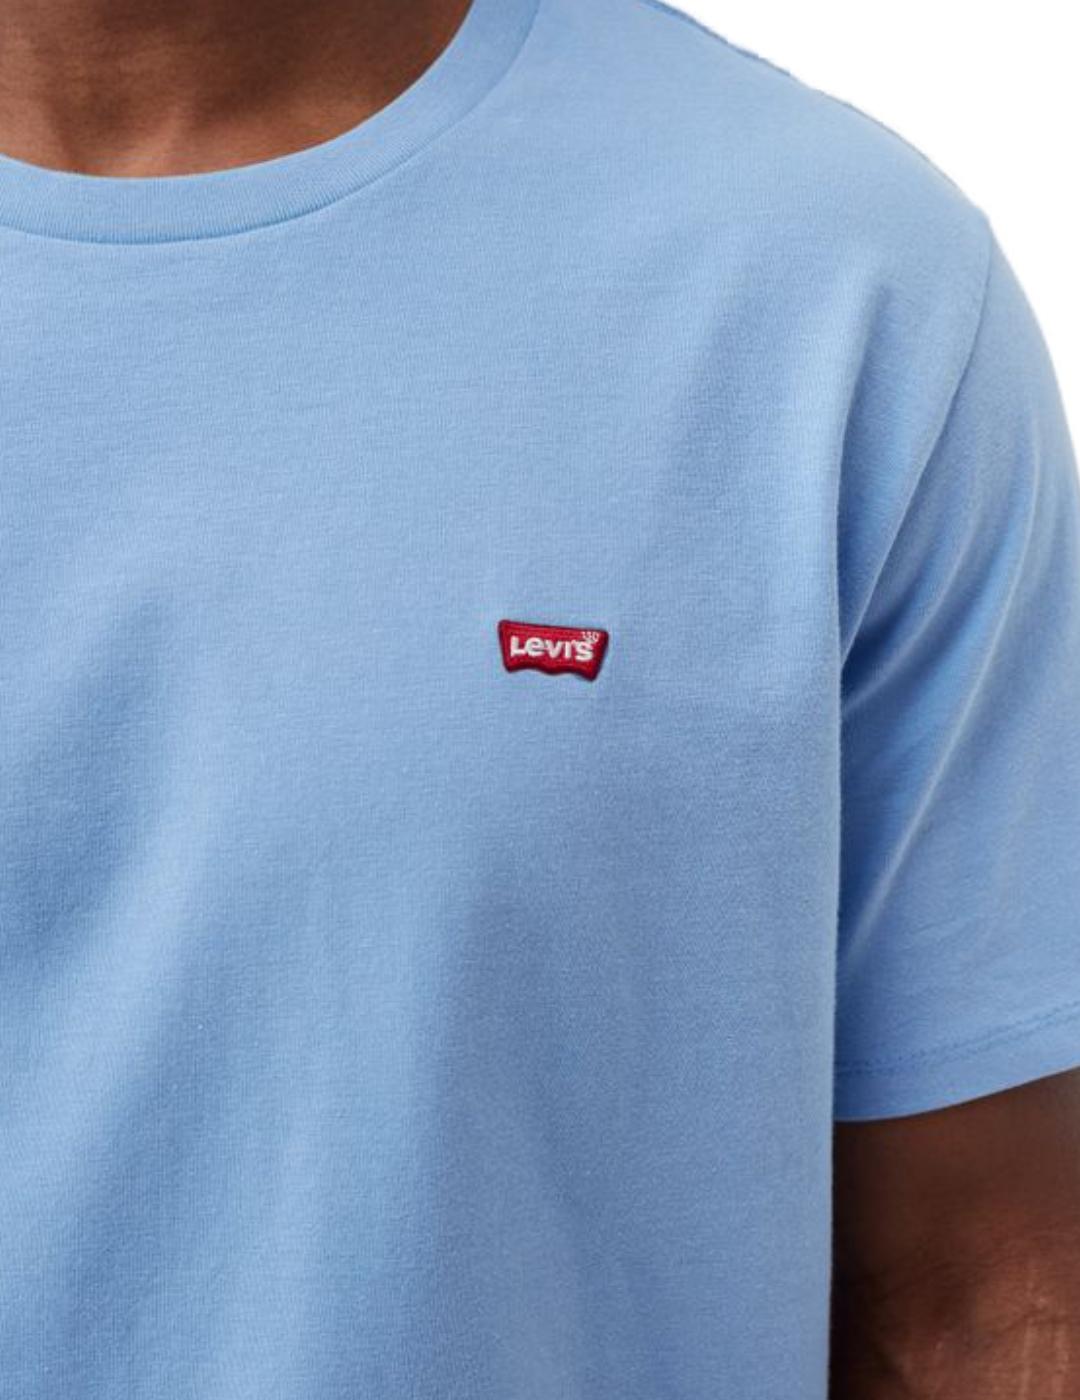 Camiseta Levi's Della Robbia azul para hombre-a